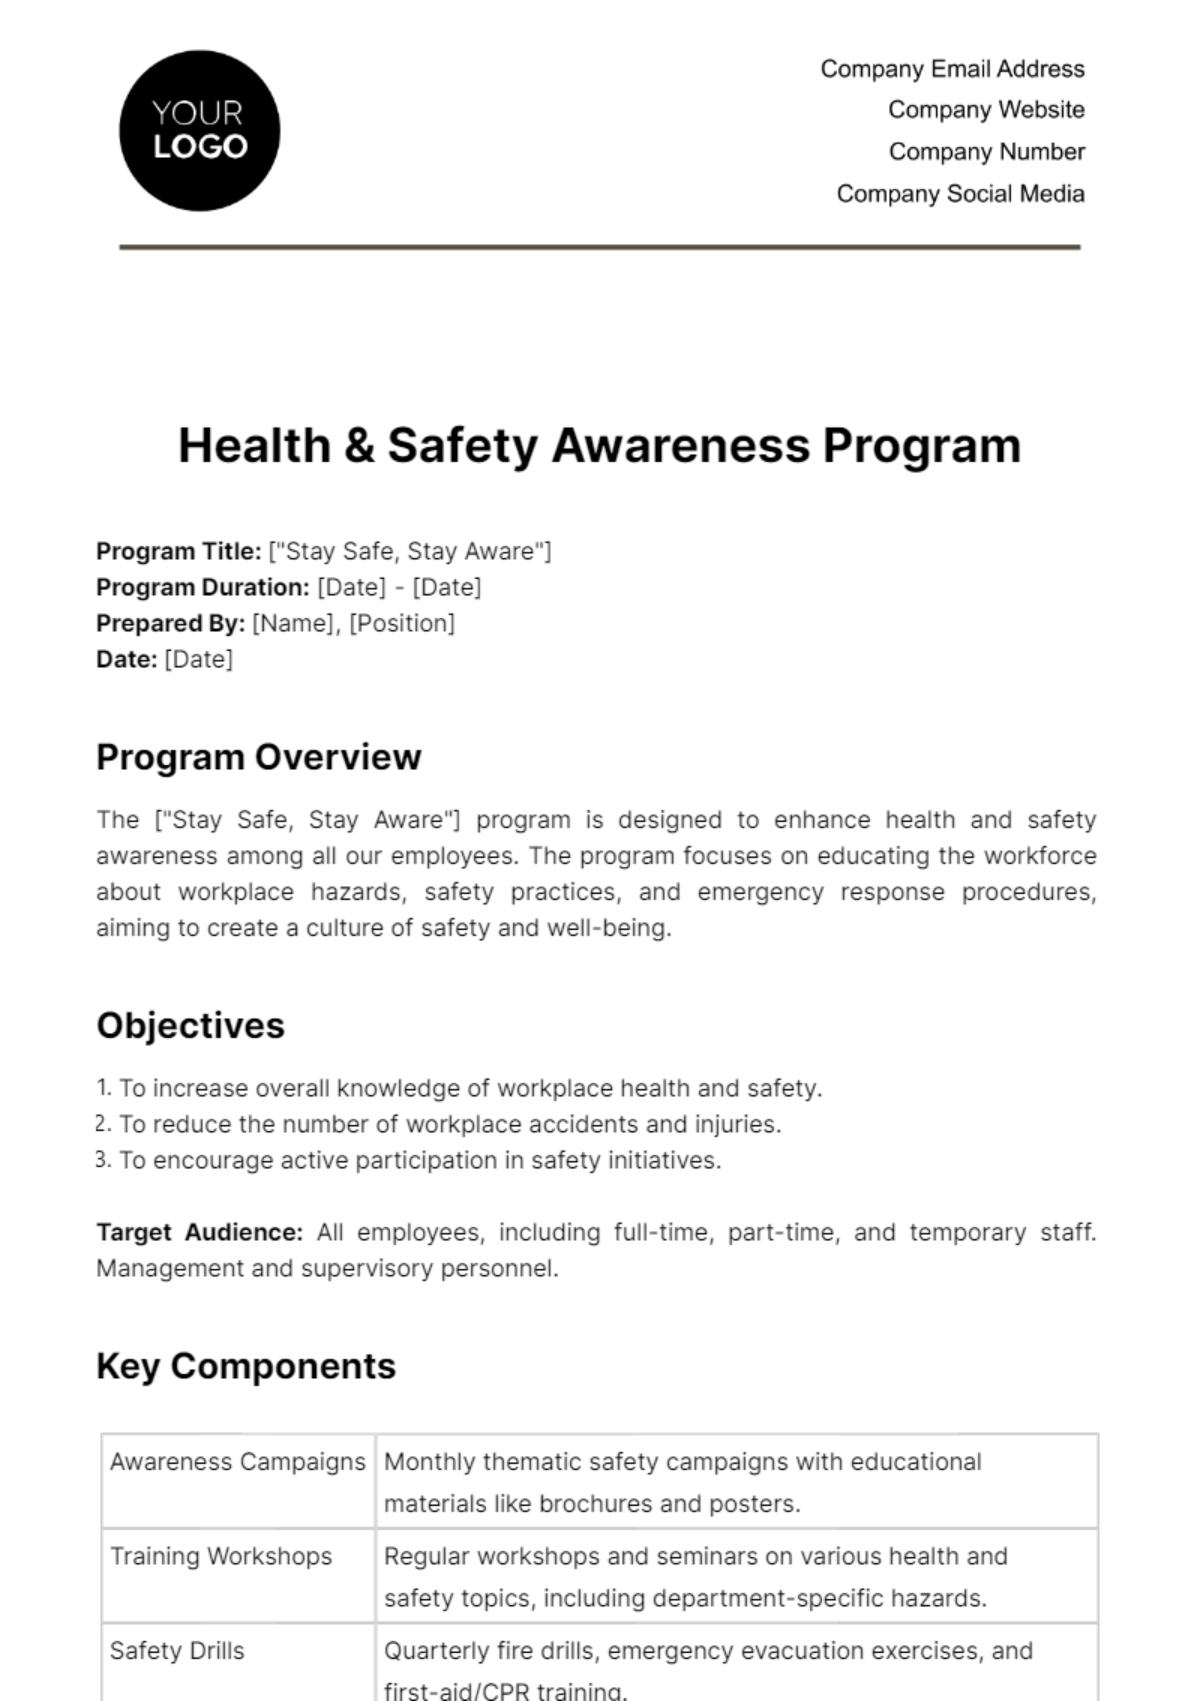 Free Health & Safety Awareness Program Template